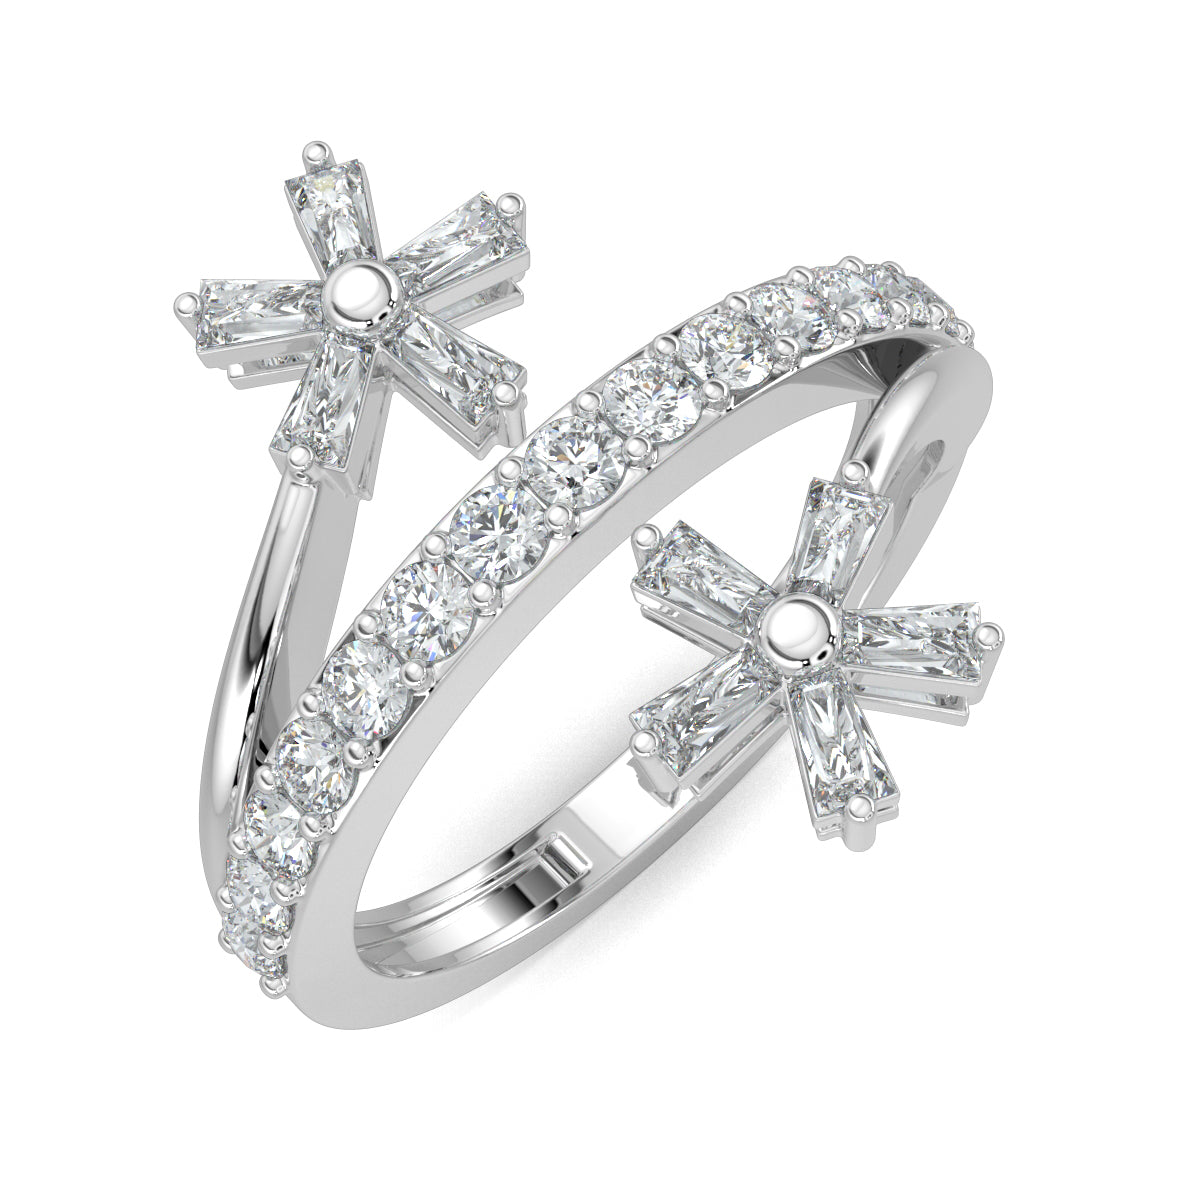 White Gold, Diamond Ring, Natural diamond ring, Lab-grown diamond ring, split shank diamond ring, everyday diamond ring, floral diamond ring, baguette diamond ring, diamond jewelry, luxury ring